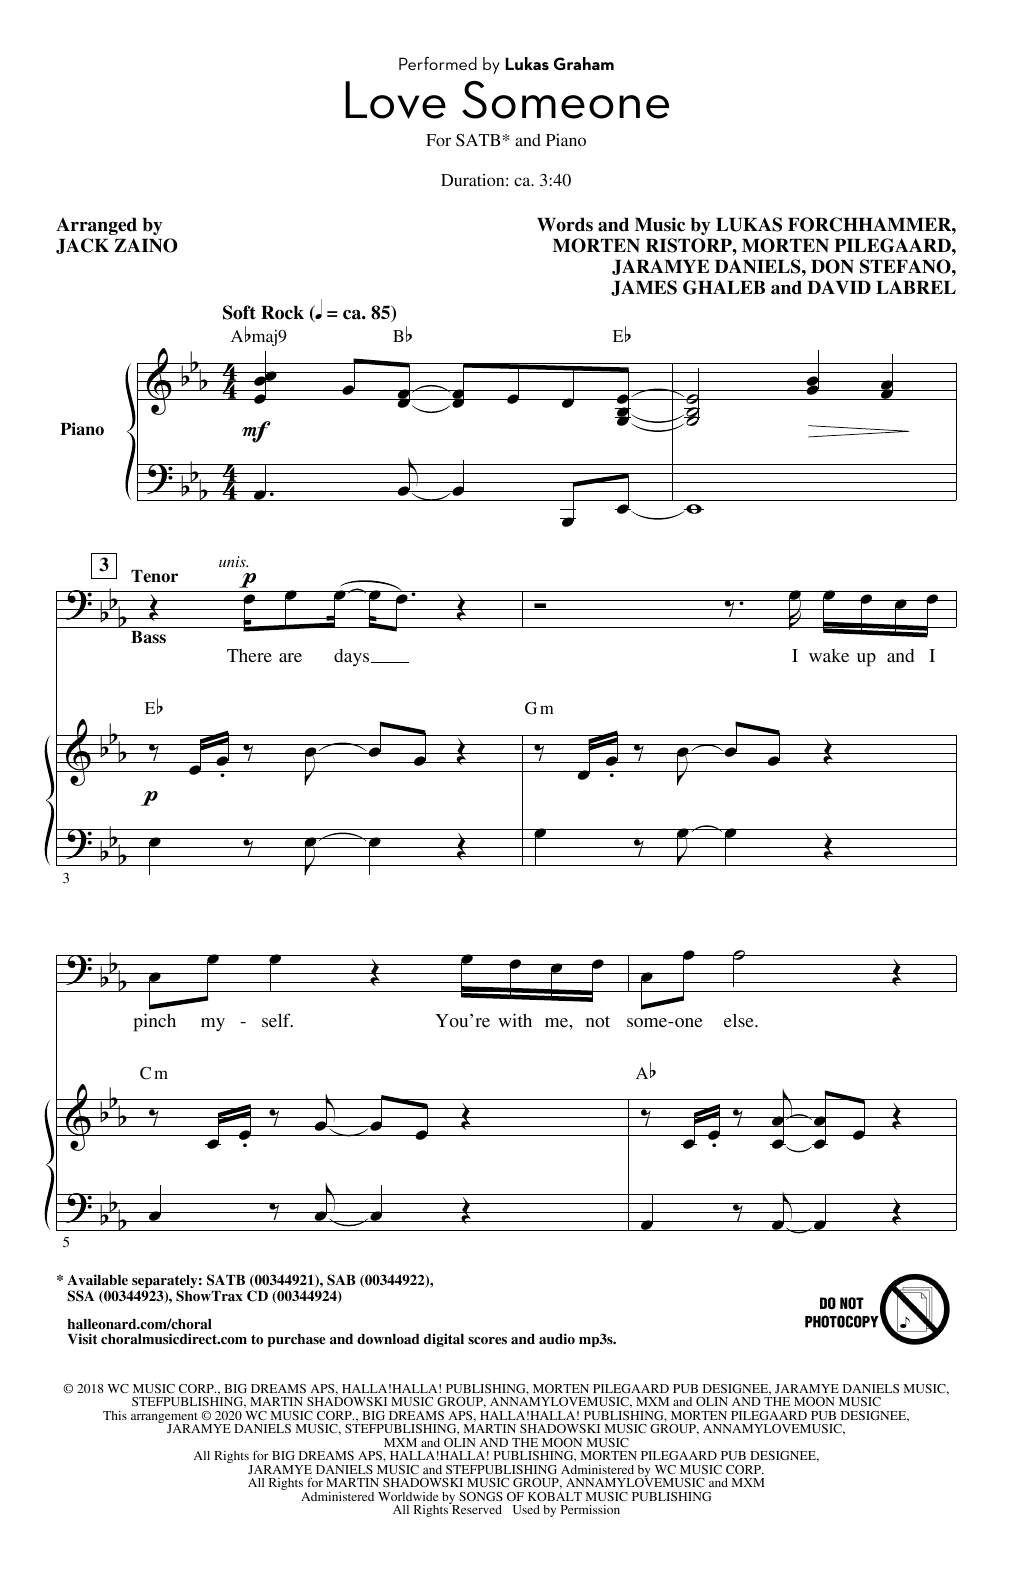 Lukas Graham Love Someone (arr. Jack Zaino) Sheet Music Notes & Chords for SAB Choir - Download or Print PDF